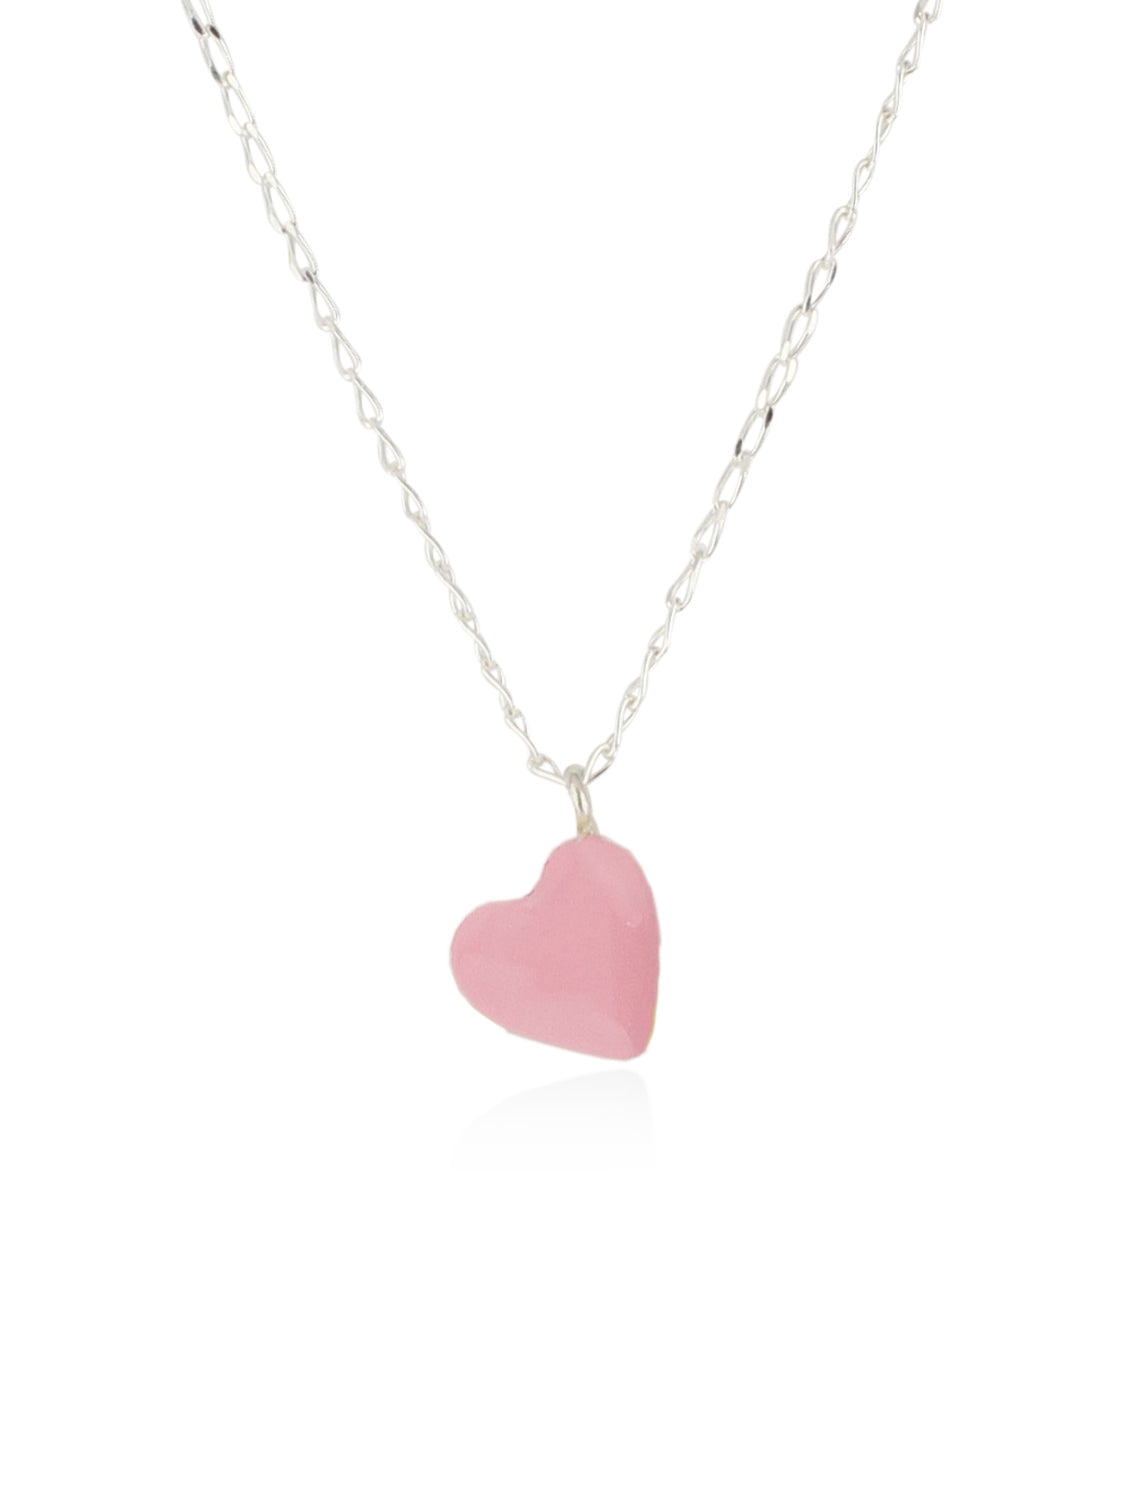 Soft Pink Enamel Heart Necklace